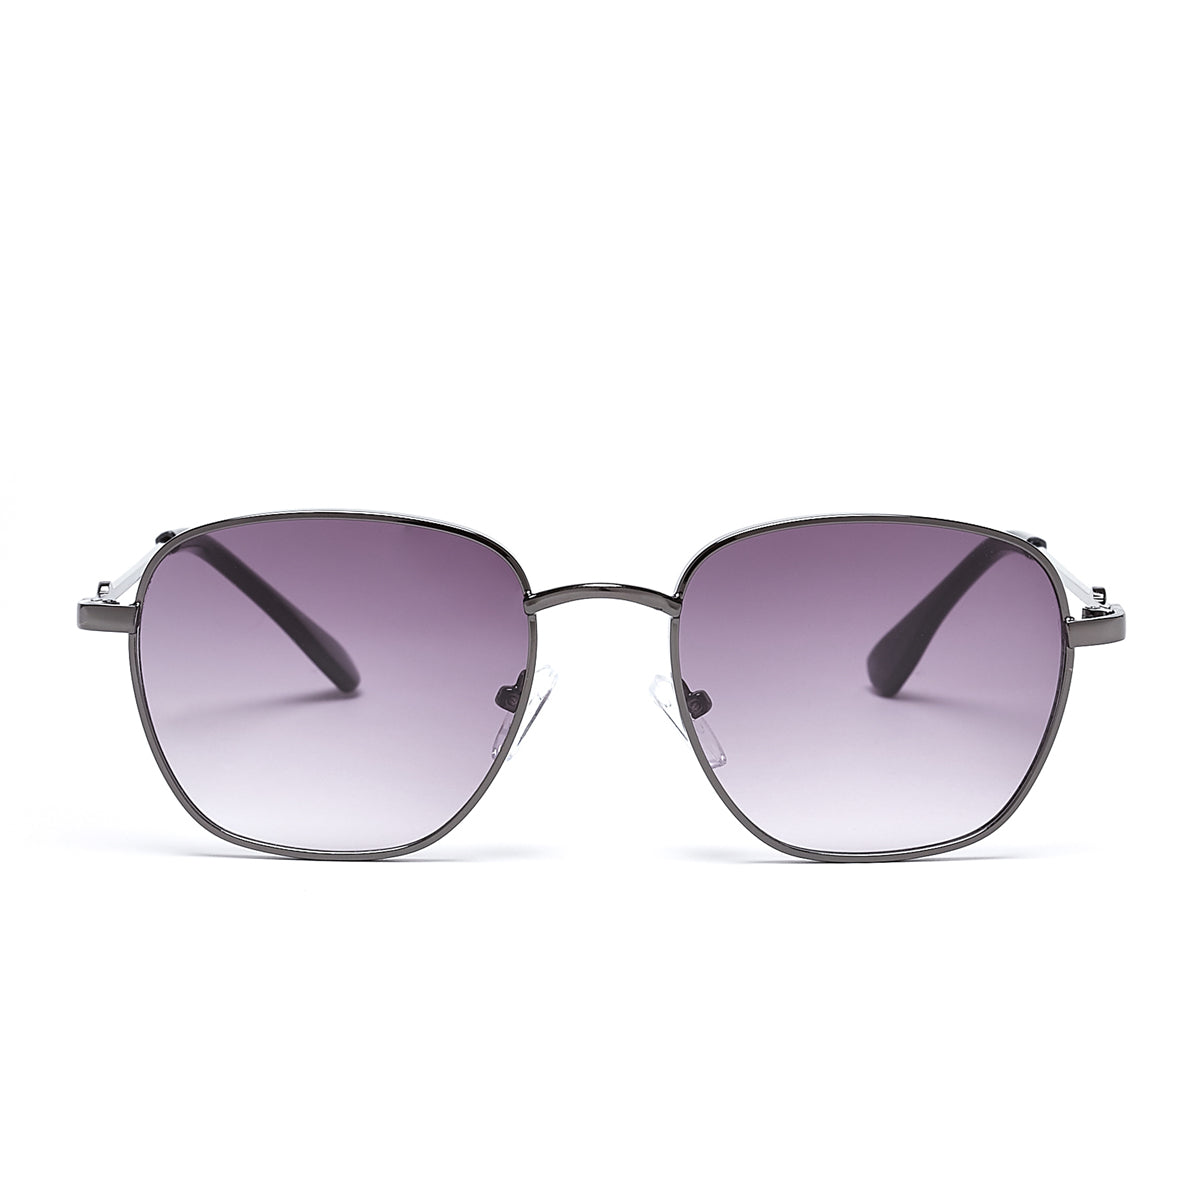 ASPEN (Size 50) UV-Protected Oval Unisex Sunglasses - IDENTITY Apparel Shop